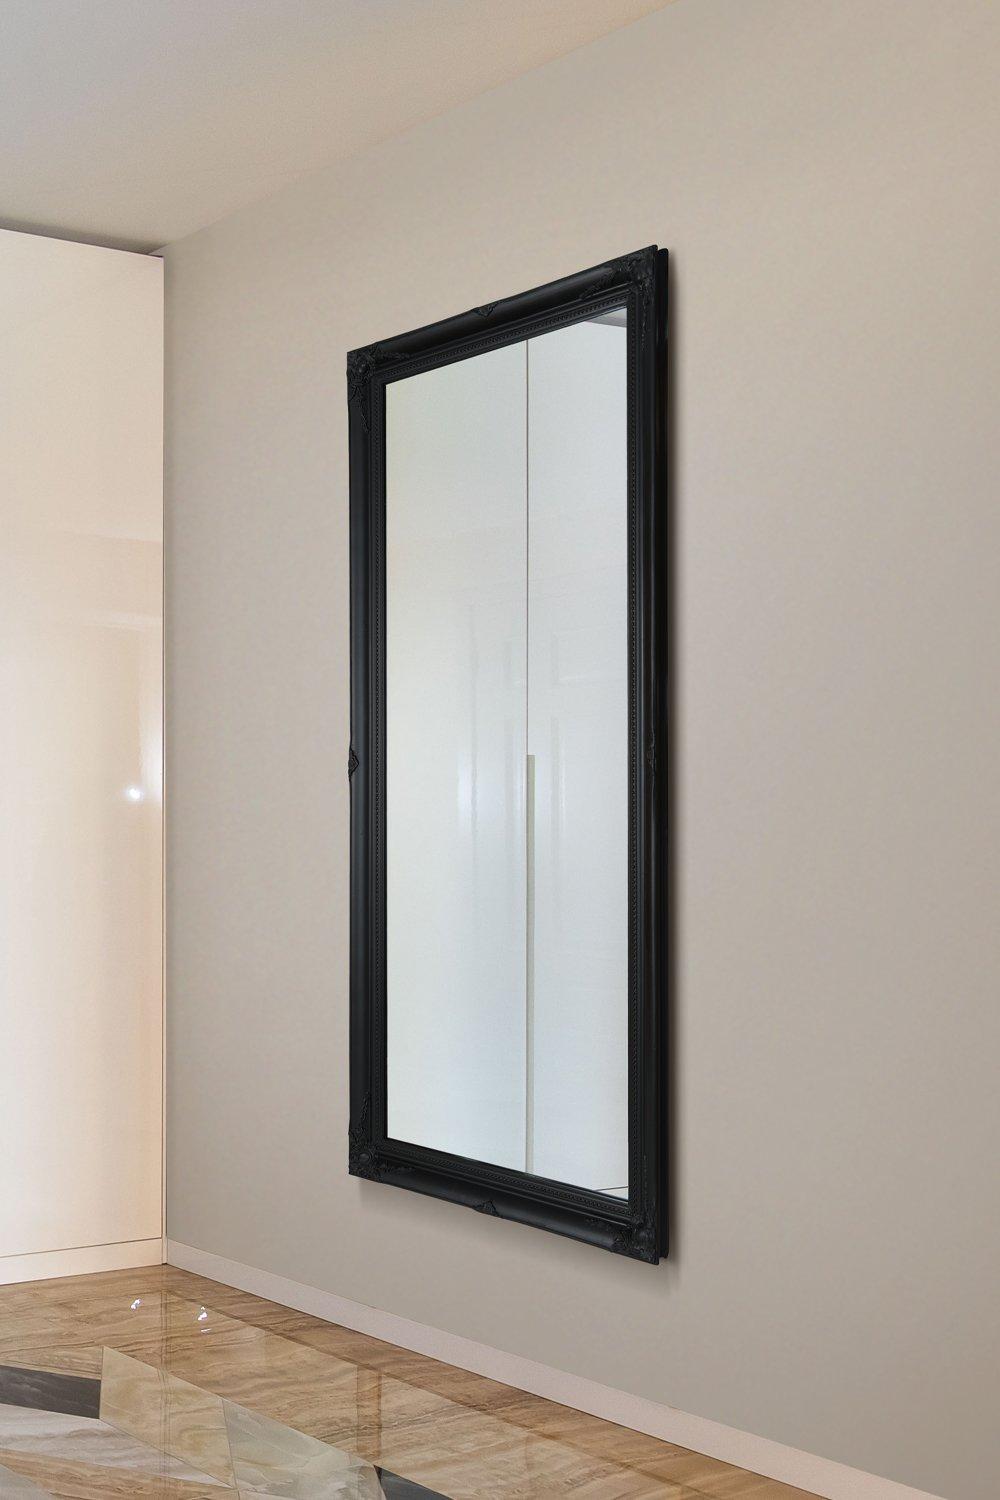 'Hamilton' Black Shabby Chic Design Large Full Length Wall/Leaner Mirror 167cm x 76cm